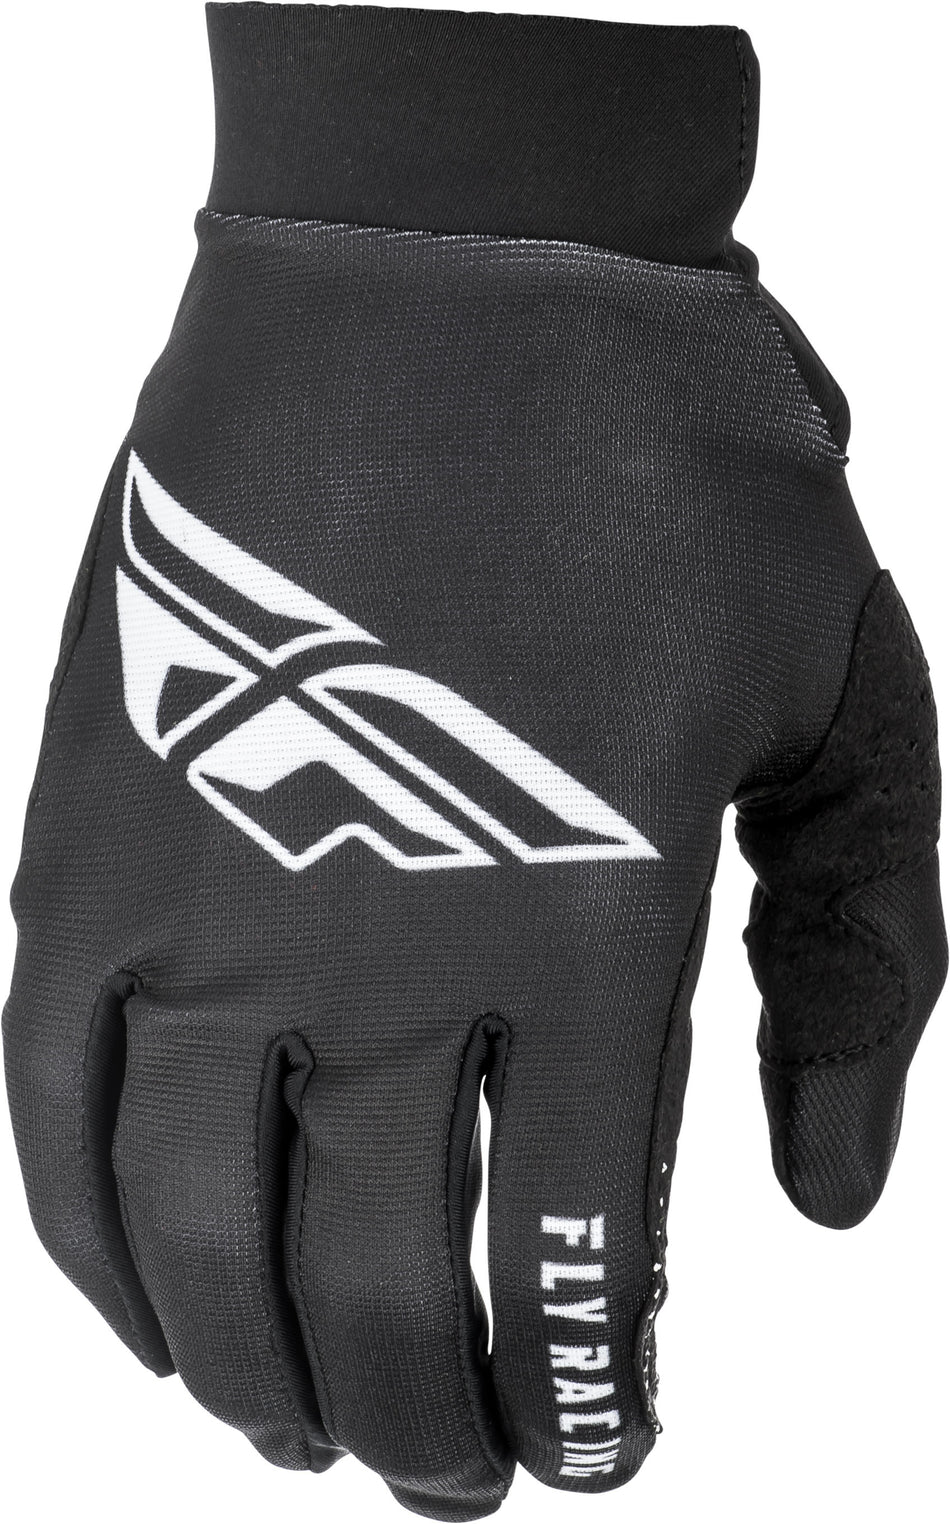 FLY RACING Pro Lite Gloves Black/White Sz 13 372-81013